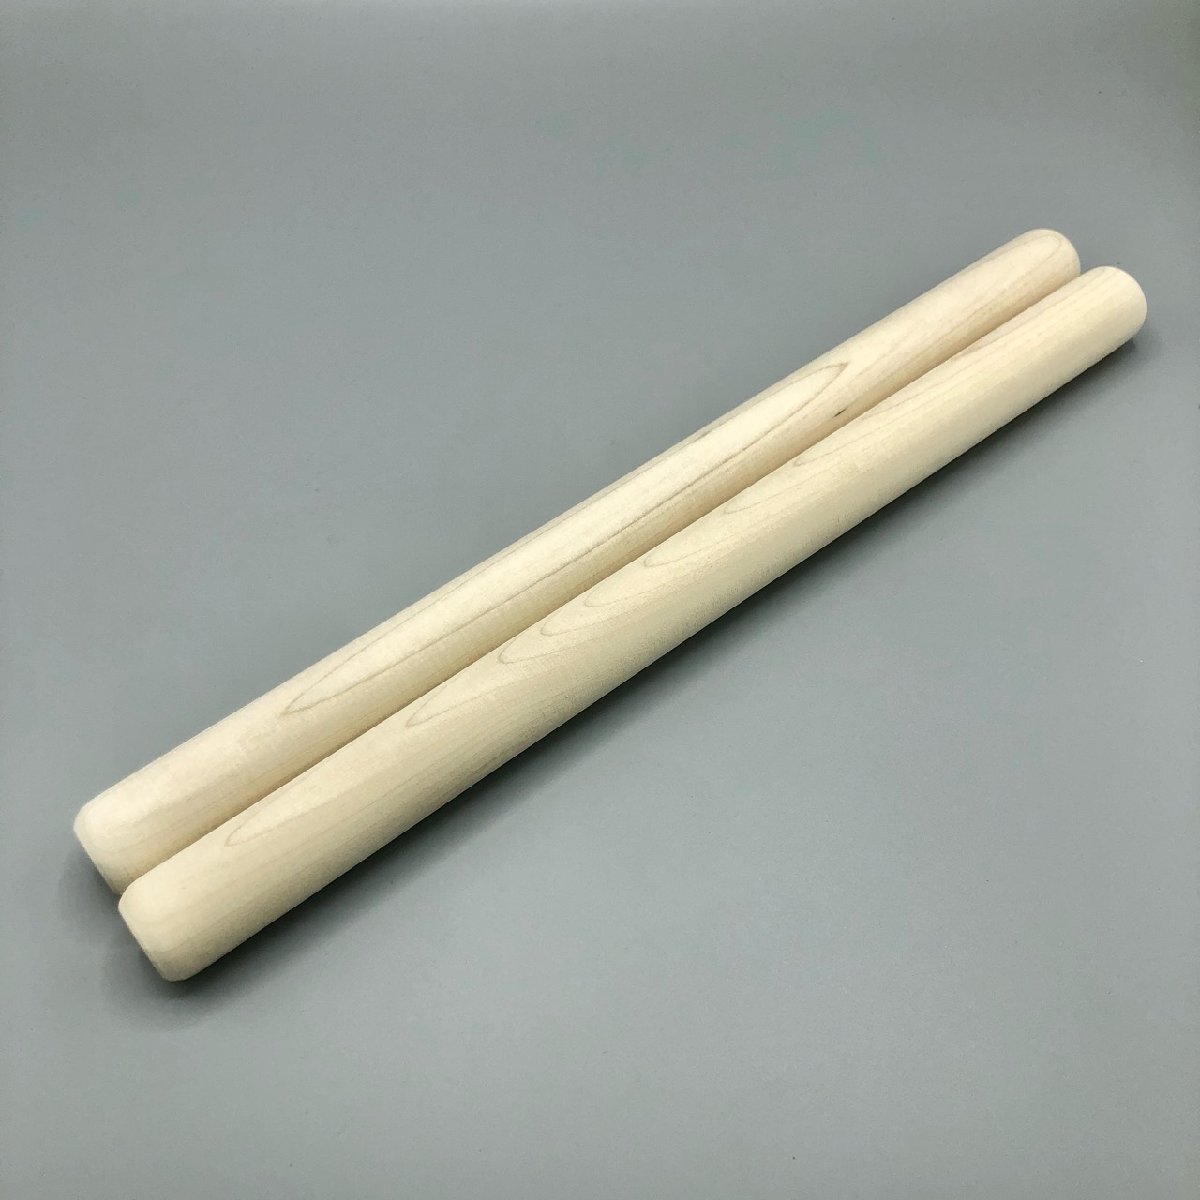  futoshi тамбурин без тарелочек палочки средний материал .( ho o)2.7cm x 36cm futoshi тамбурин без тарелочек .